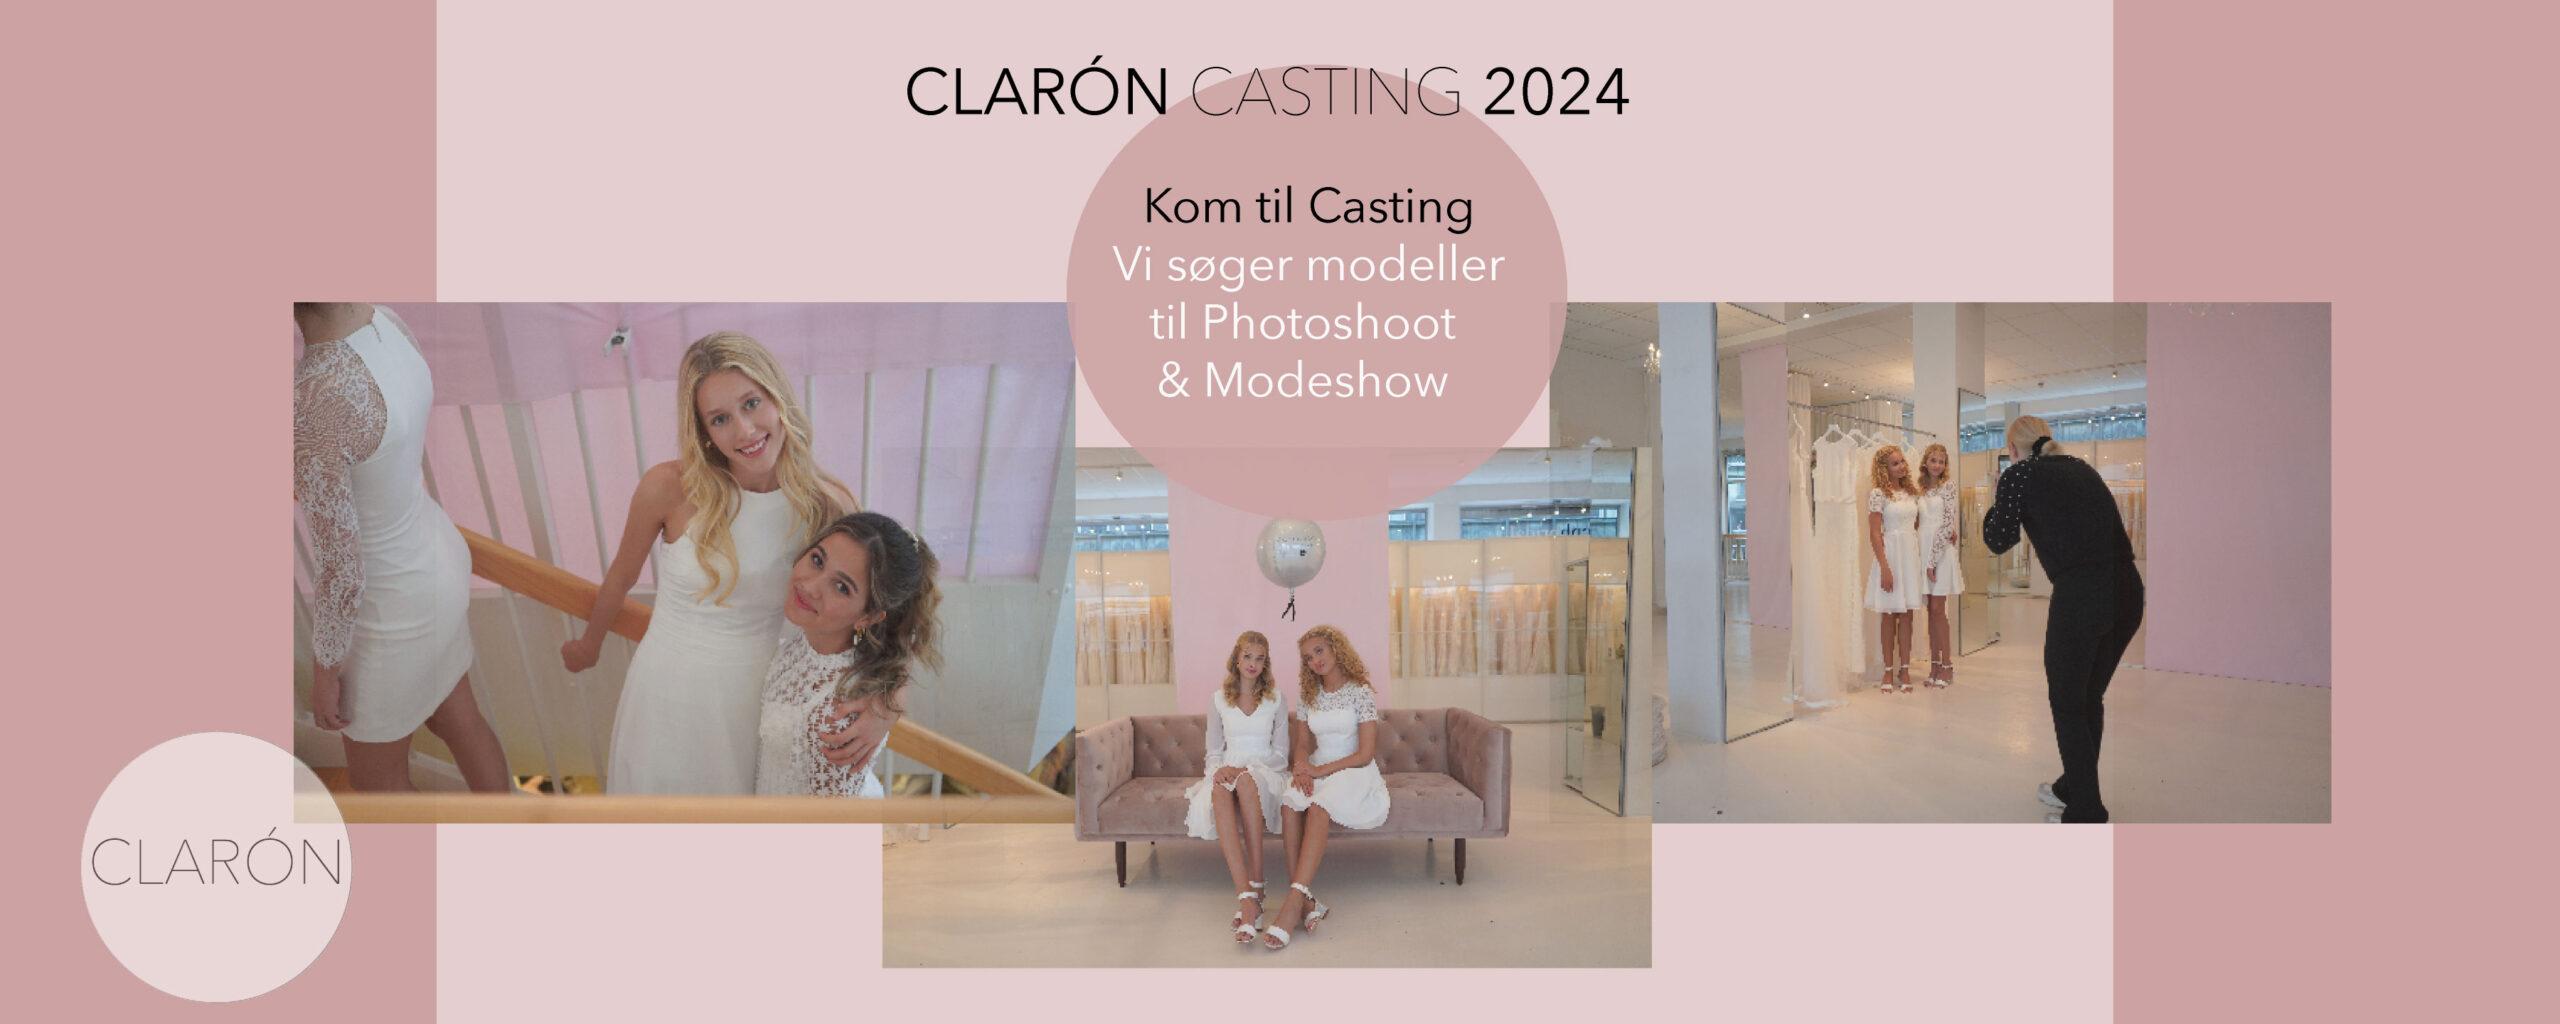 Konfirmationskjoler 2024 - Casting til modeshow og photoshoot